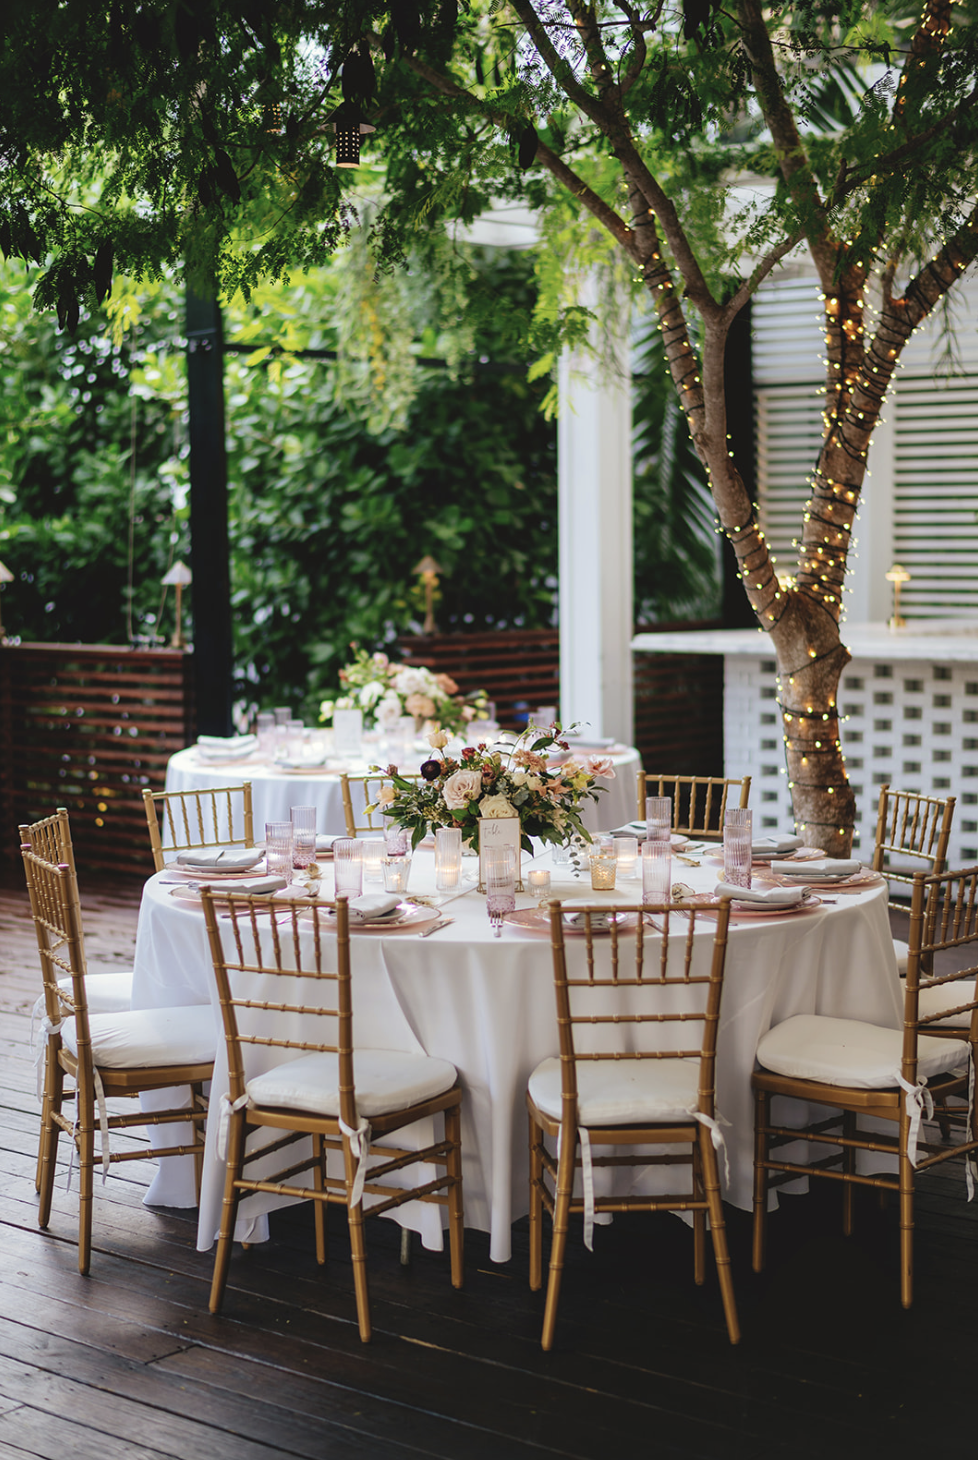 Bamboo chairs surround  circular tables at elegant outdoor Florida wedding reception at Holly Blue